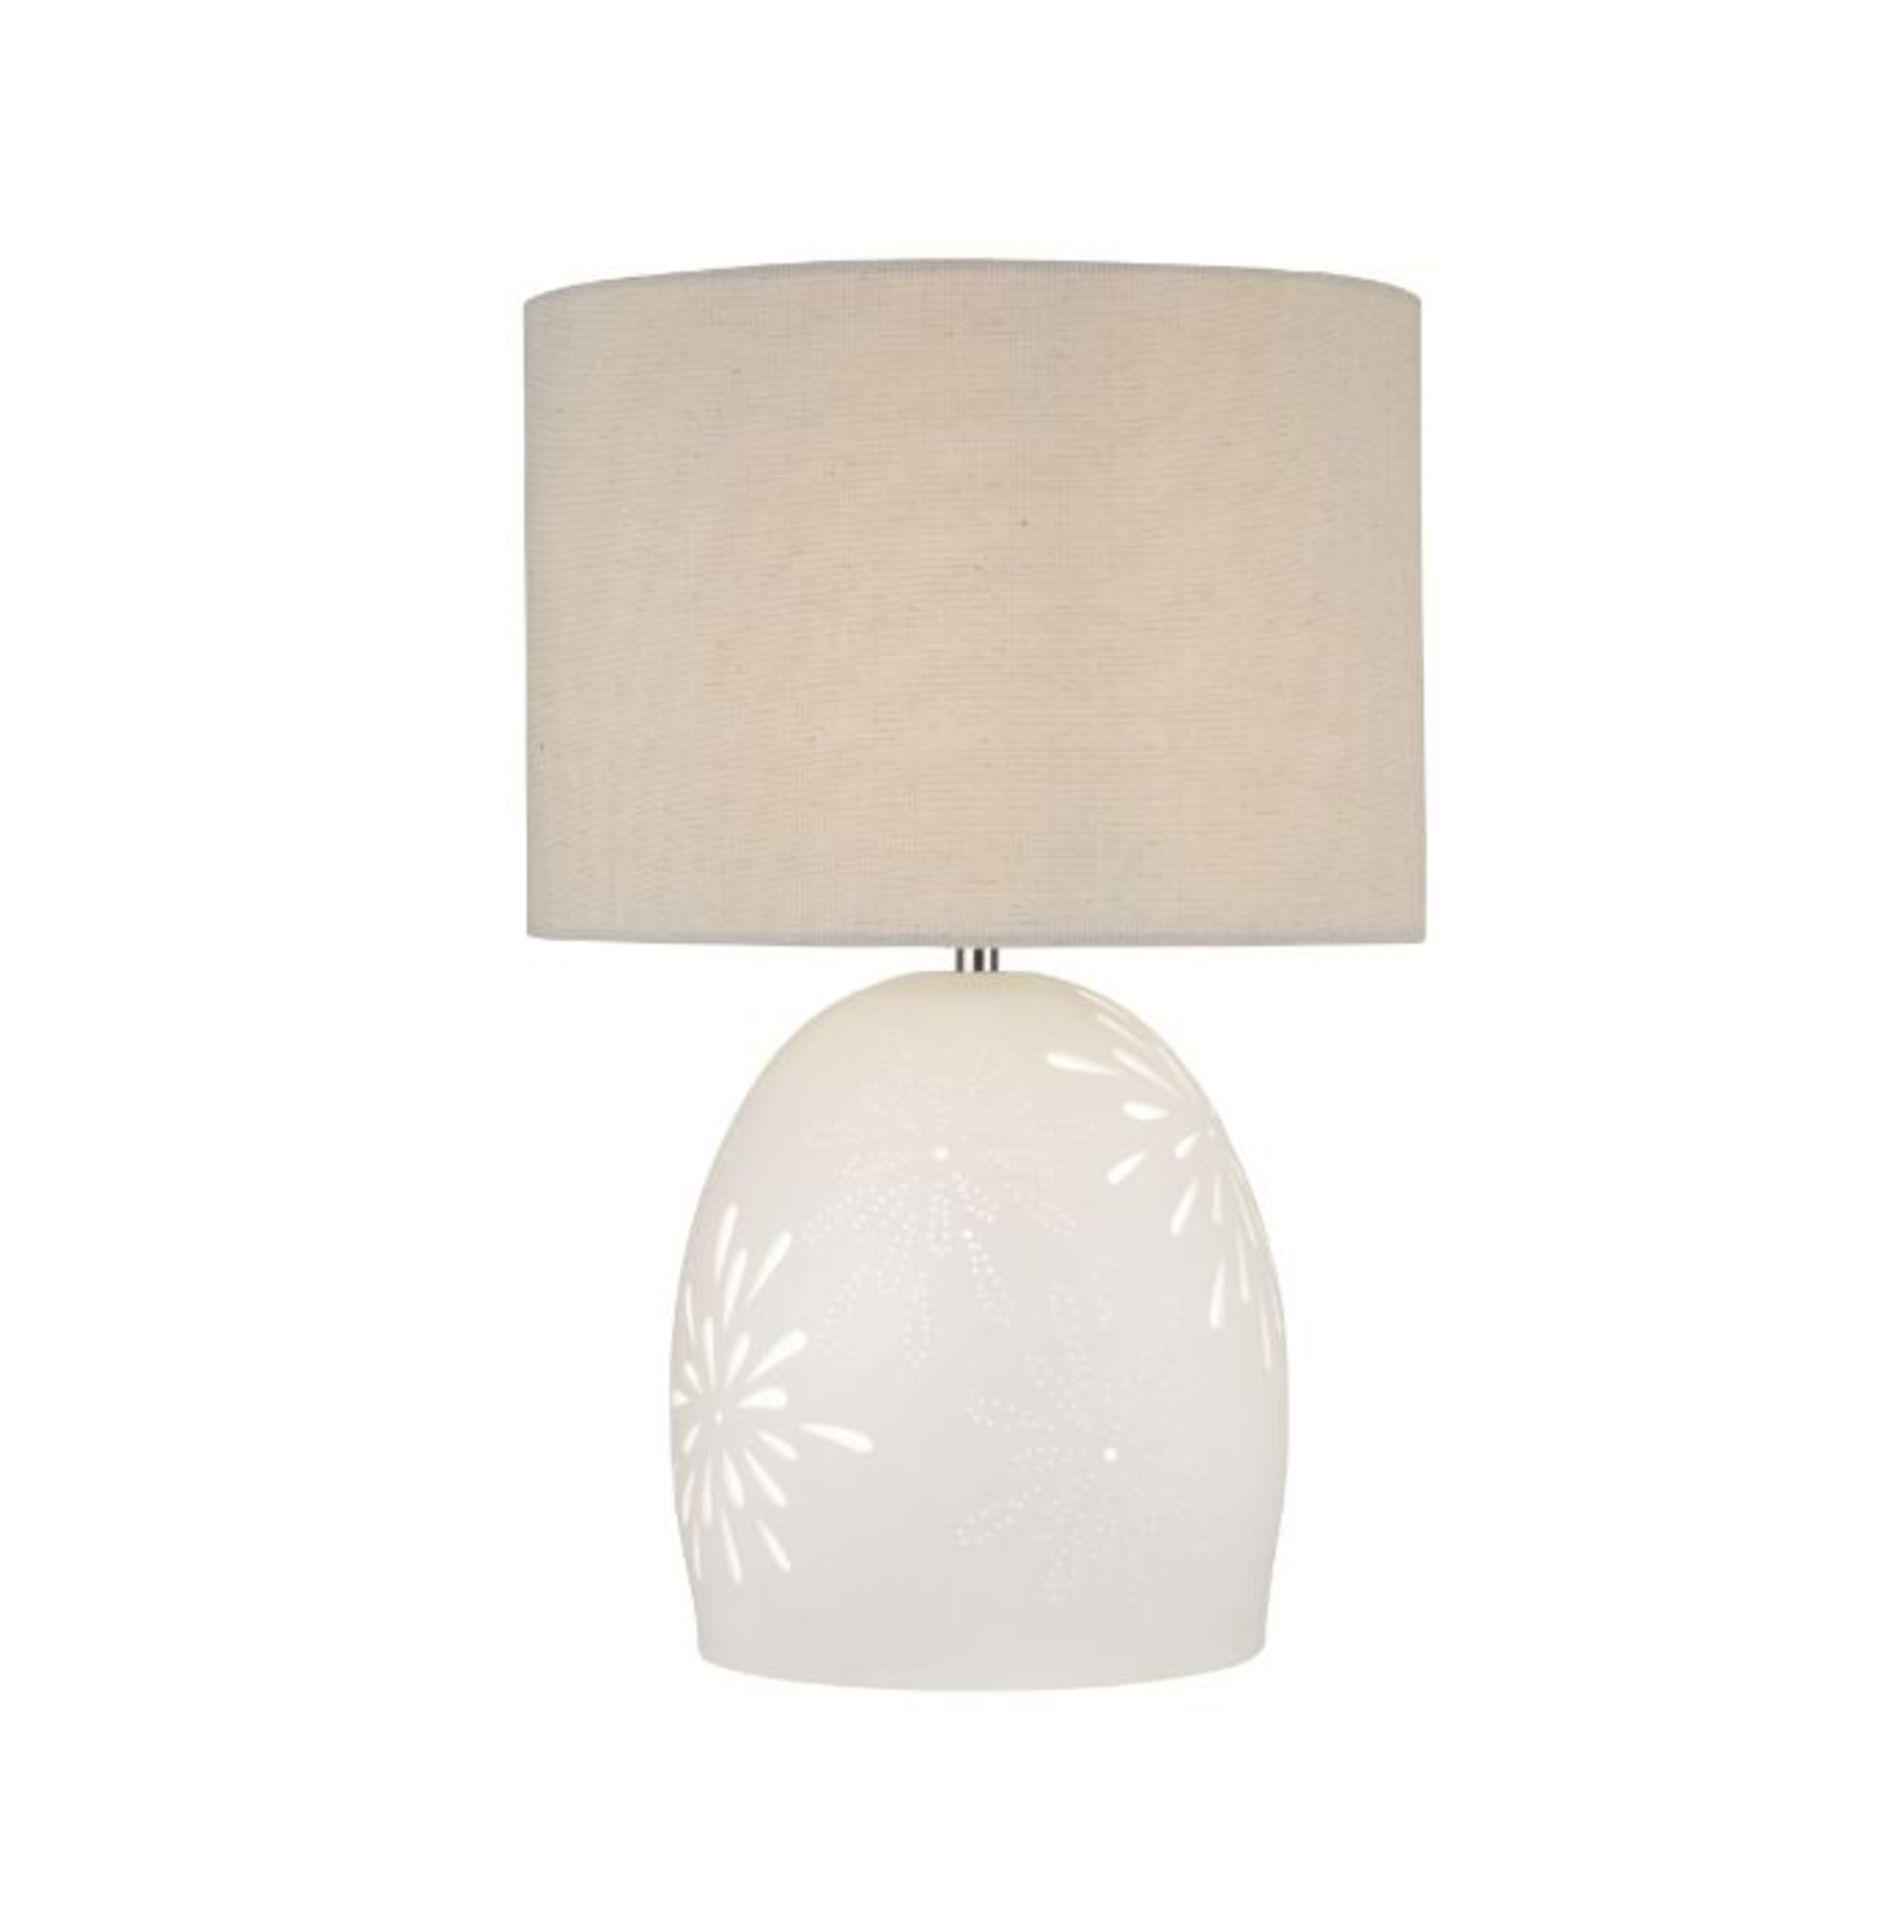 DUAL LIGHT CERAMIC TABLE LAMP WHITE/CHROME/BEIGE.